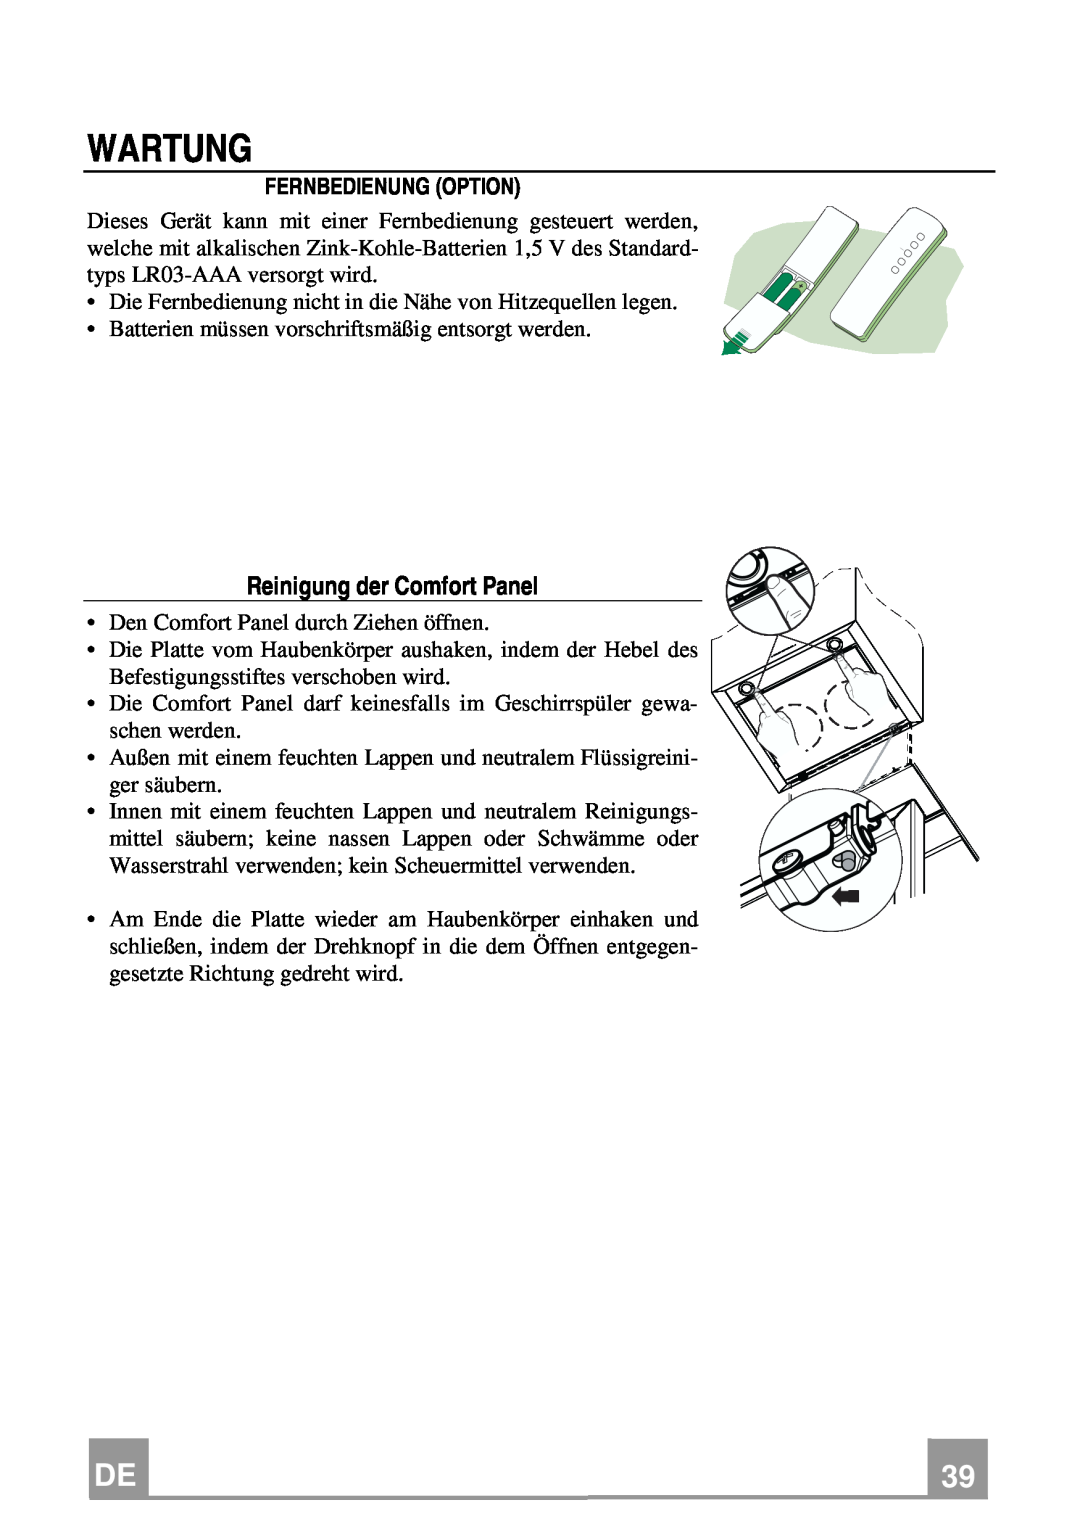 Franke Consumer Products FCR 708-H TC manual Wartung, Reinigung der Comfort Panel, Fernbedienung Option 